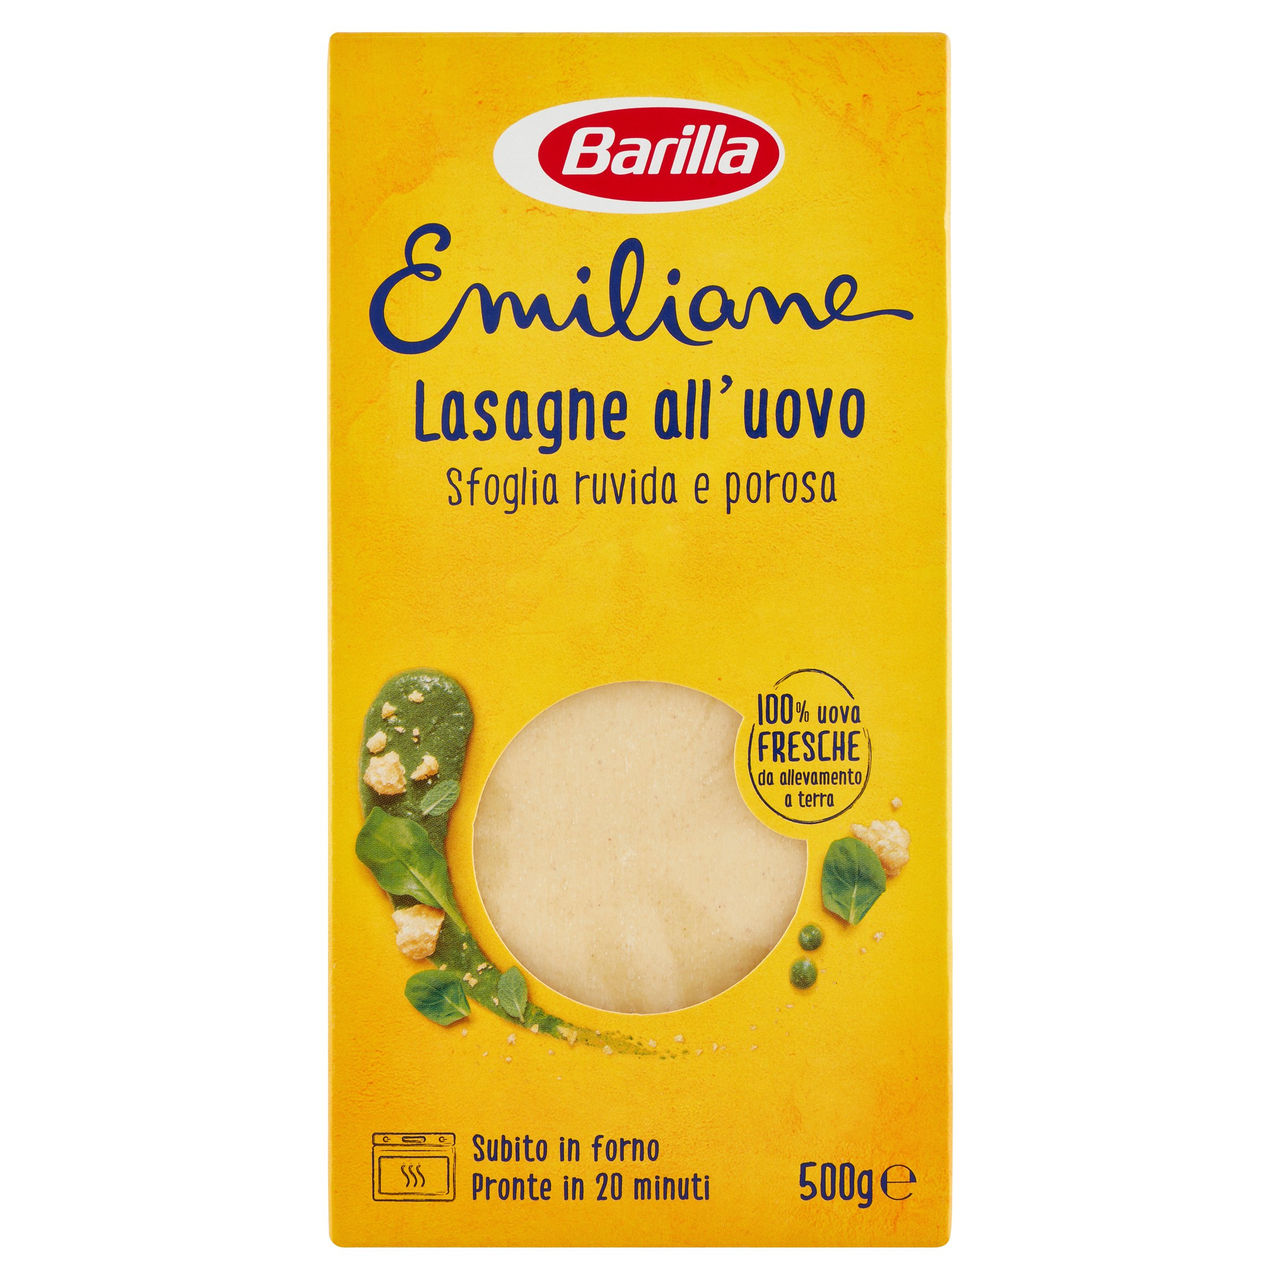 Lasagne Barilla Emiliane Pasta all'uovo online